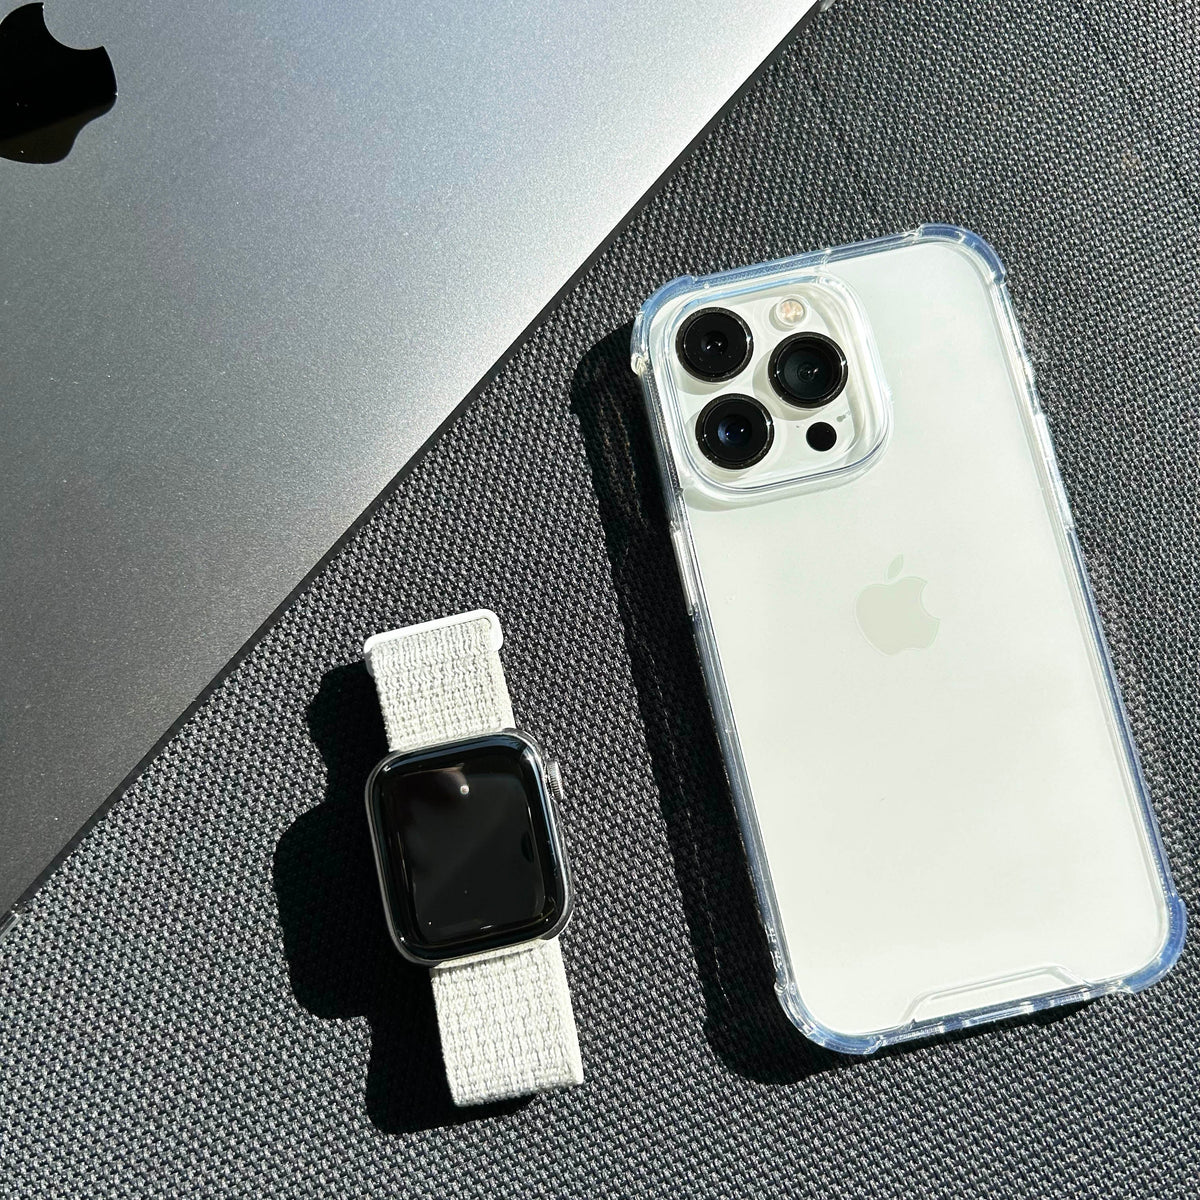 Ultra Clear iPhone Case - iPhone 11 Pro